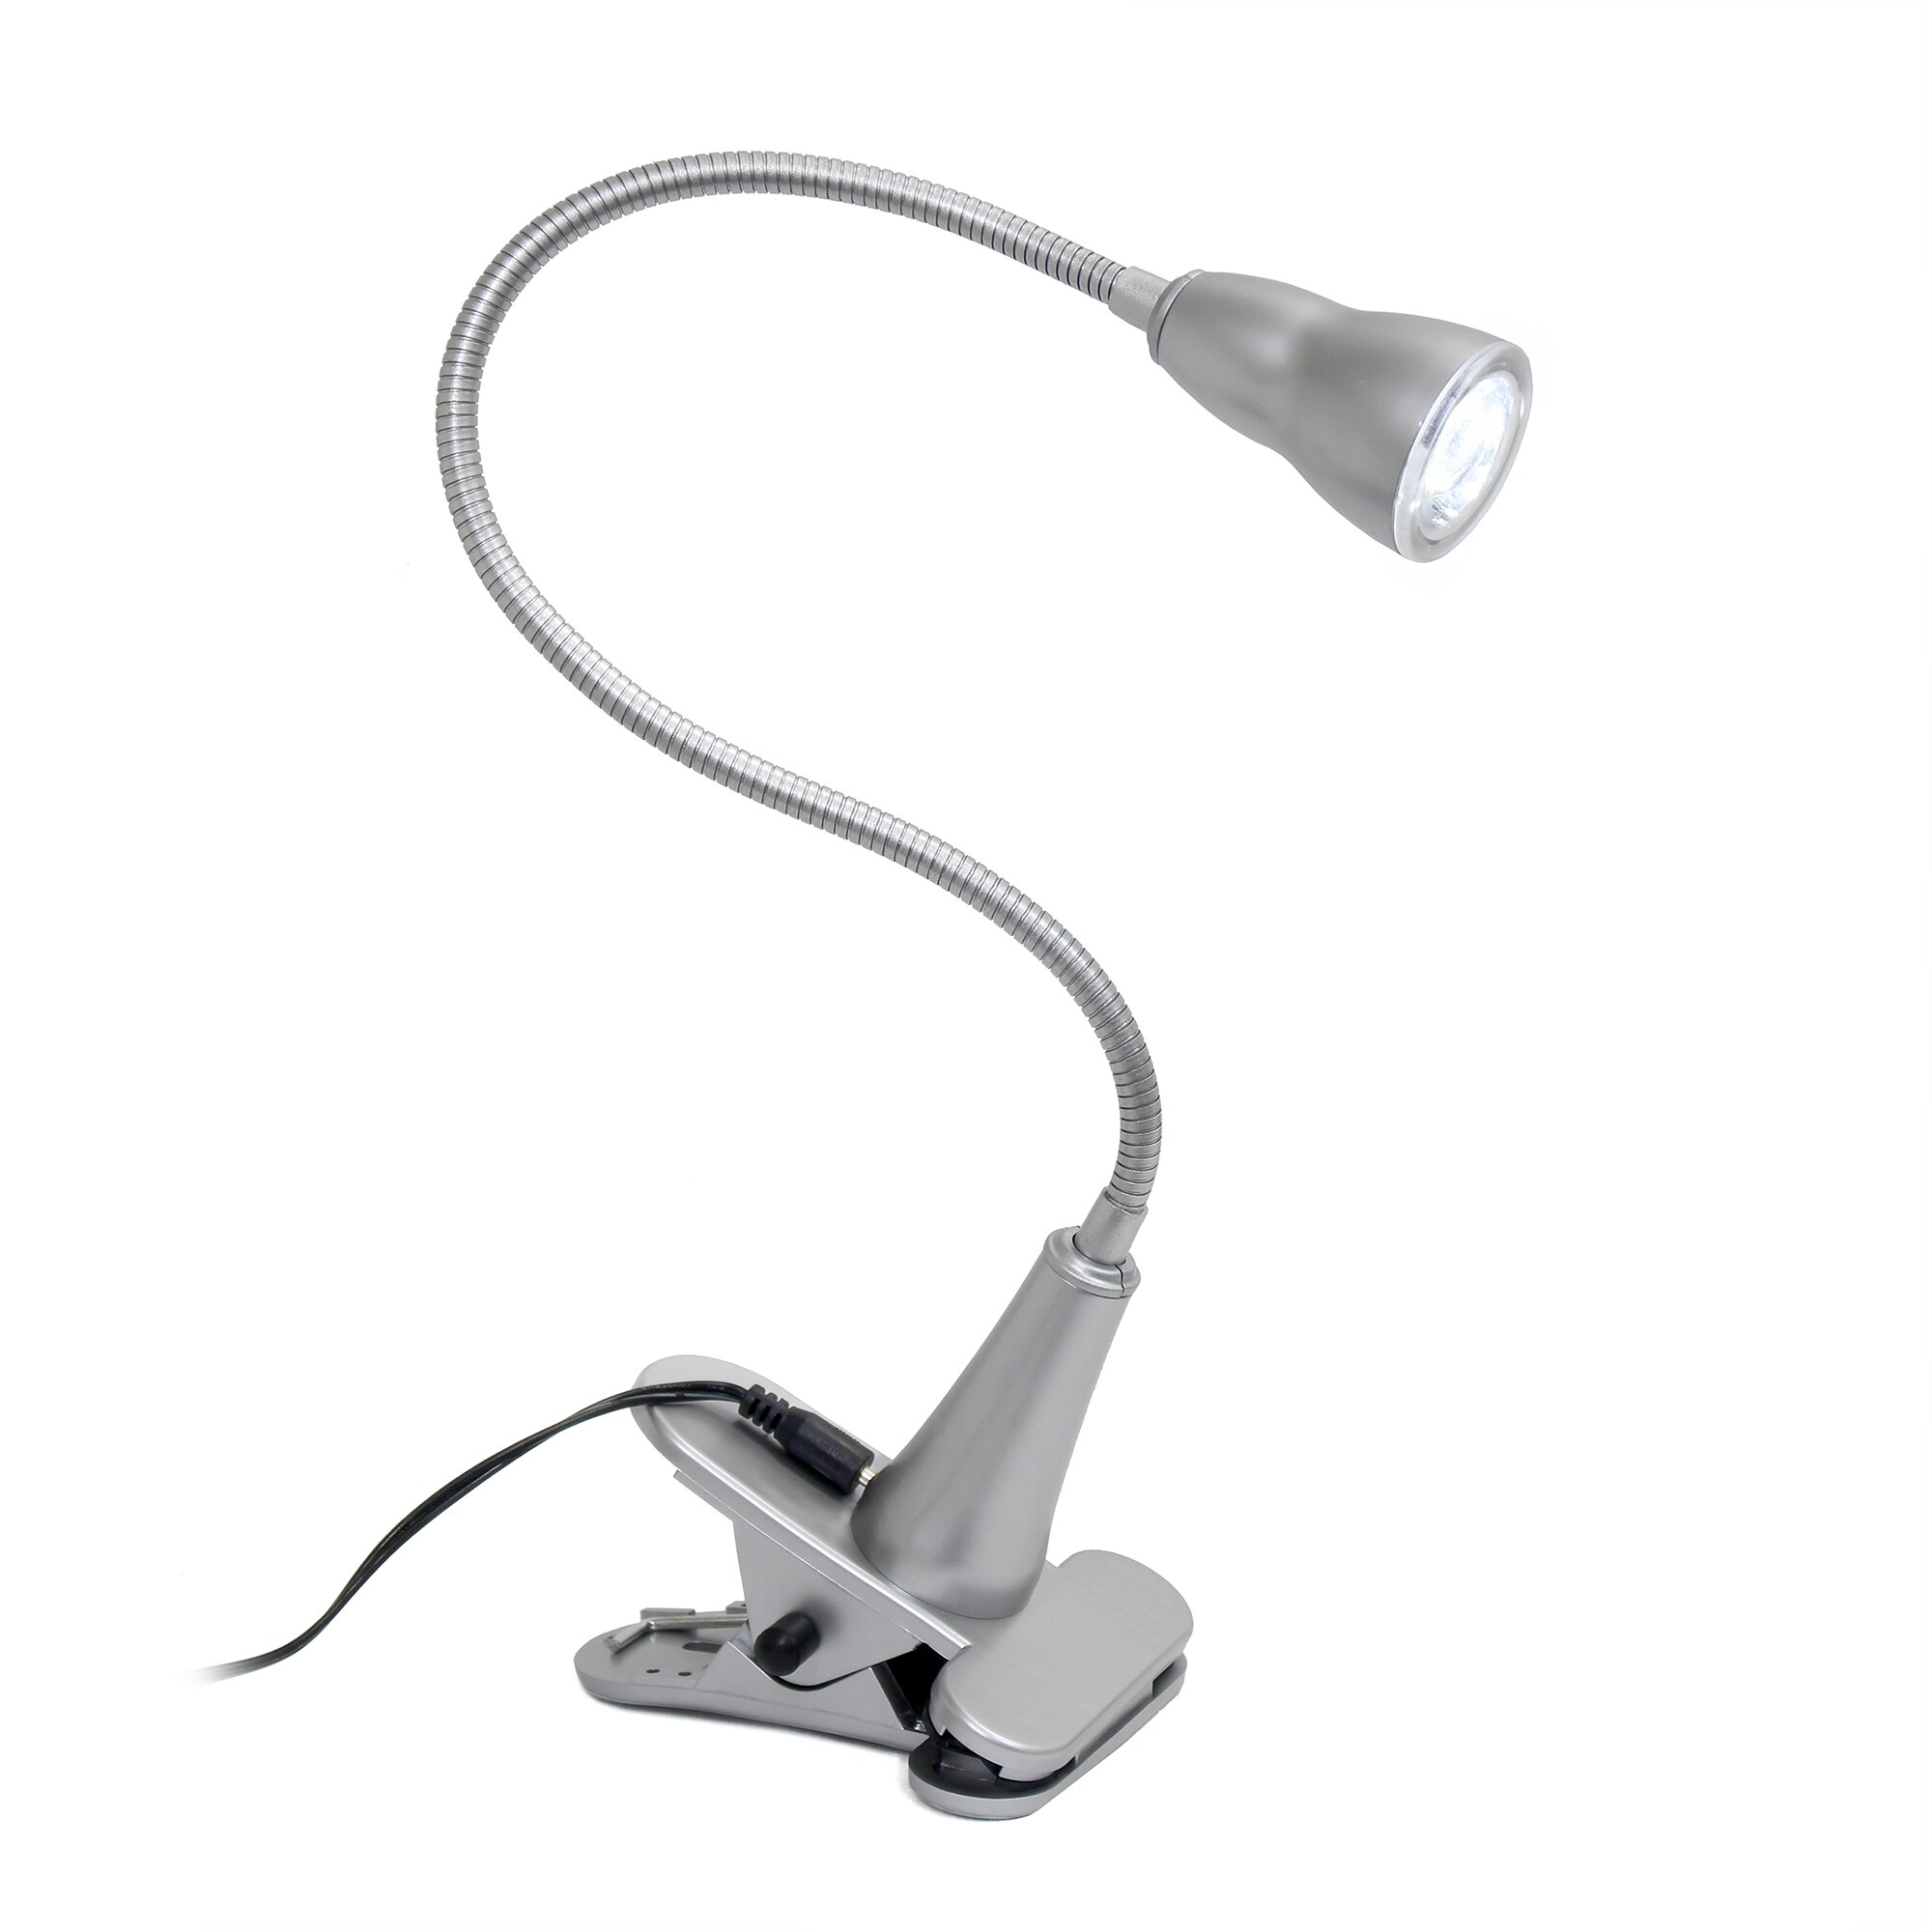 LIVARNO Lux ® Workshop Lamp 2-in-1 Combo Lamp High Brightness 